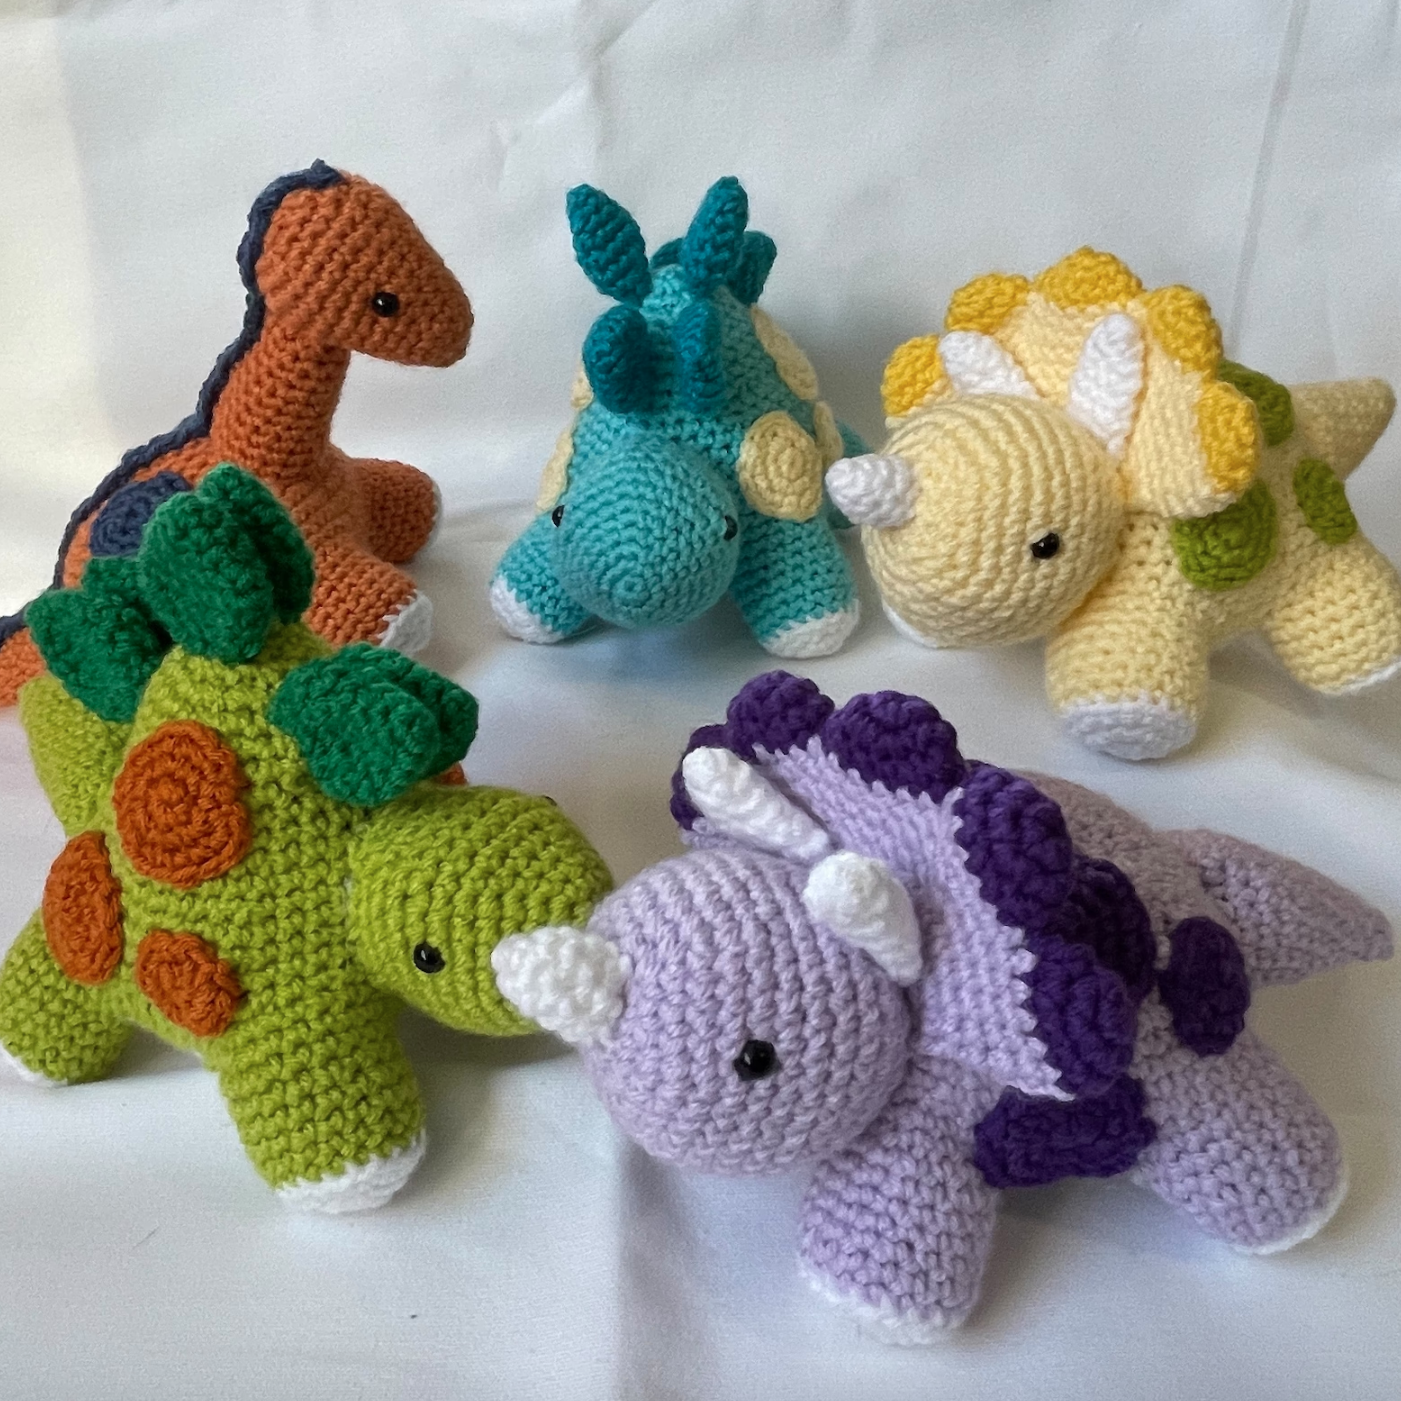 PP OPOUNT Crochet Blue Dinosaur Kit, Crochet Kit for Beginners with  Step-by-Step Instruction and Video Tutorials, Quick & Easy Crochet Starter  Kit for